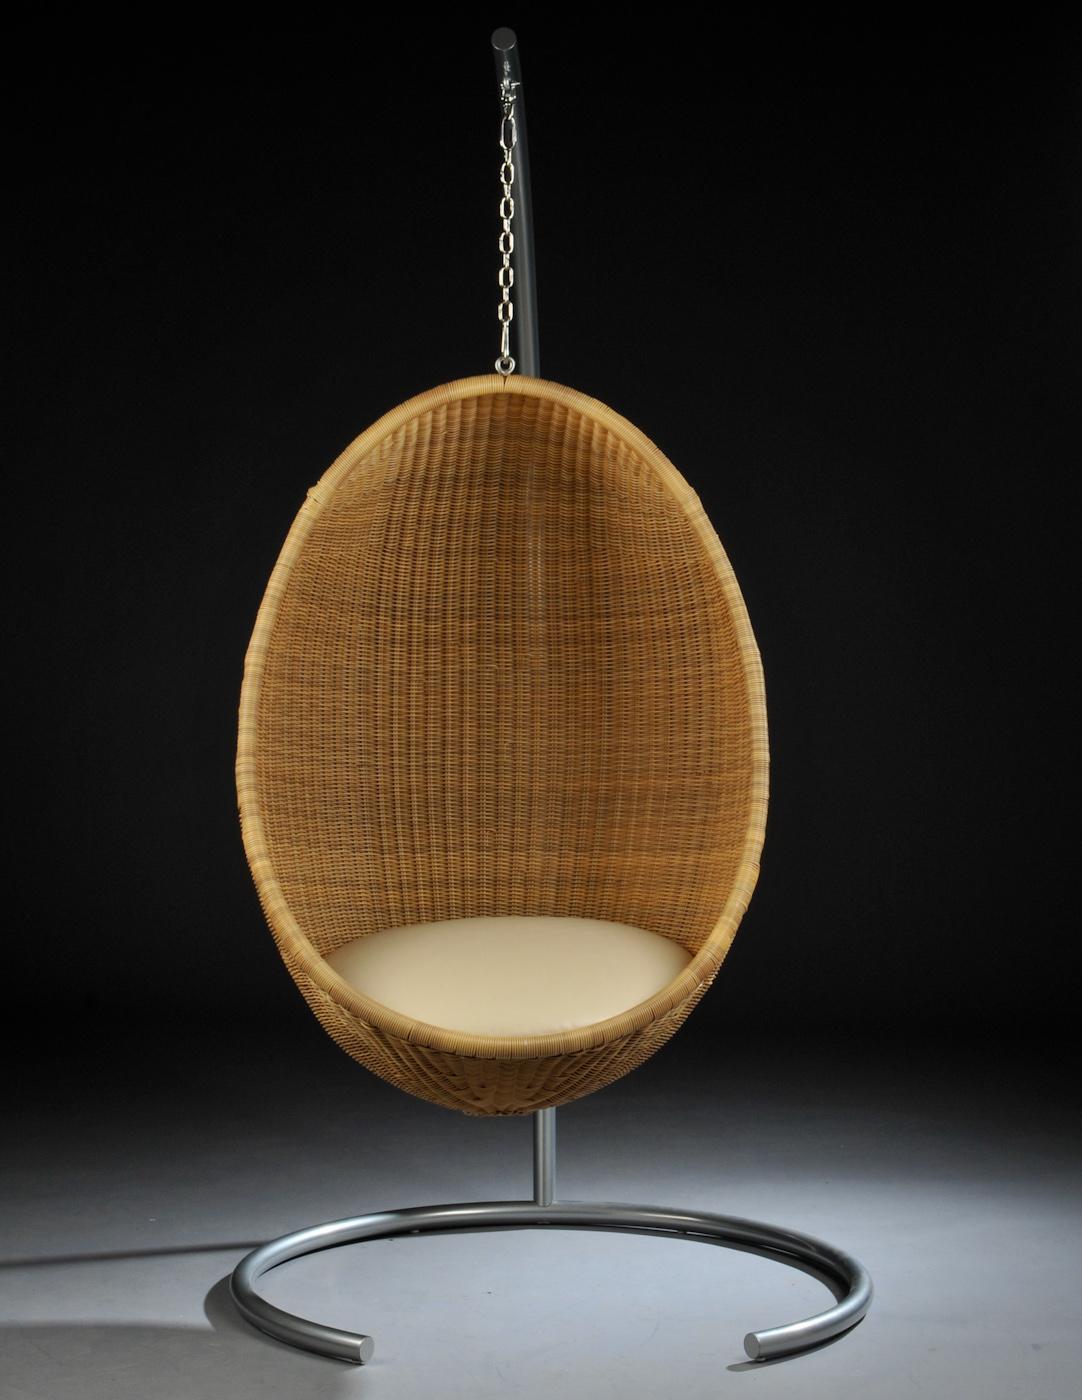 1950s Nanna & Jorgen Ditzel design hanging Rattan egg chair, high quality, elegant and timeless design. (new item, never used).